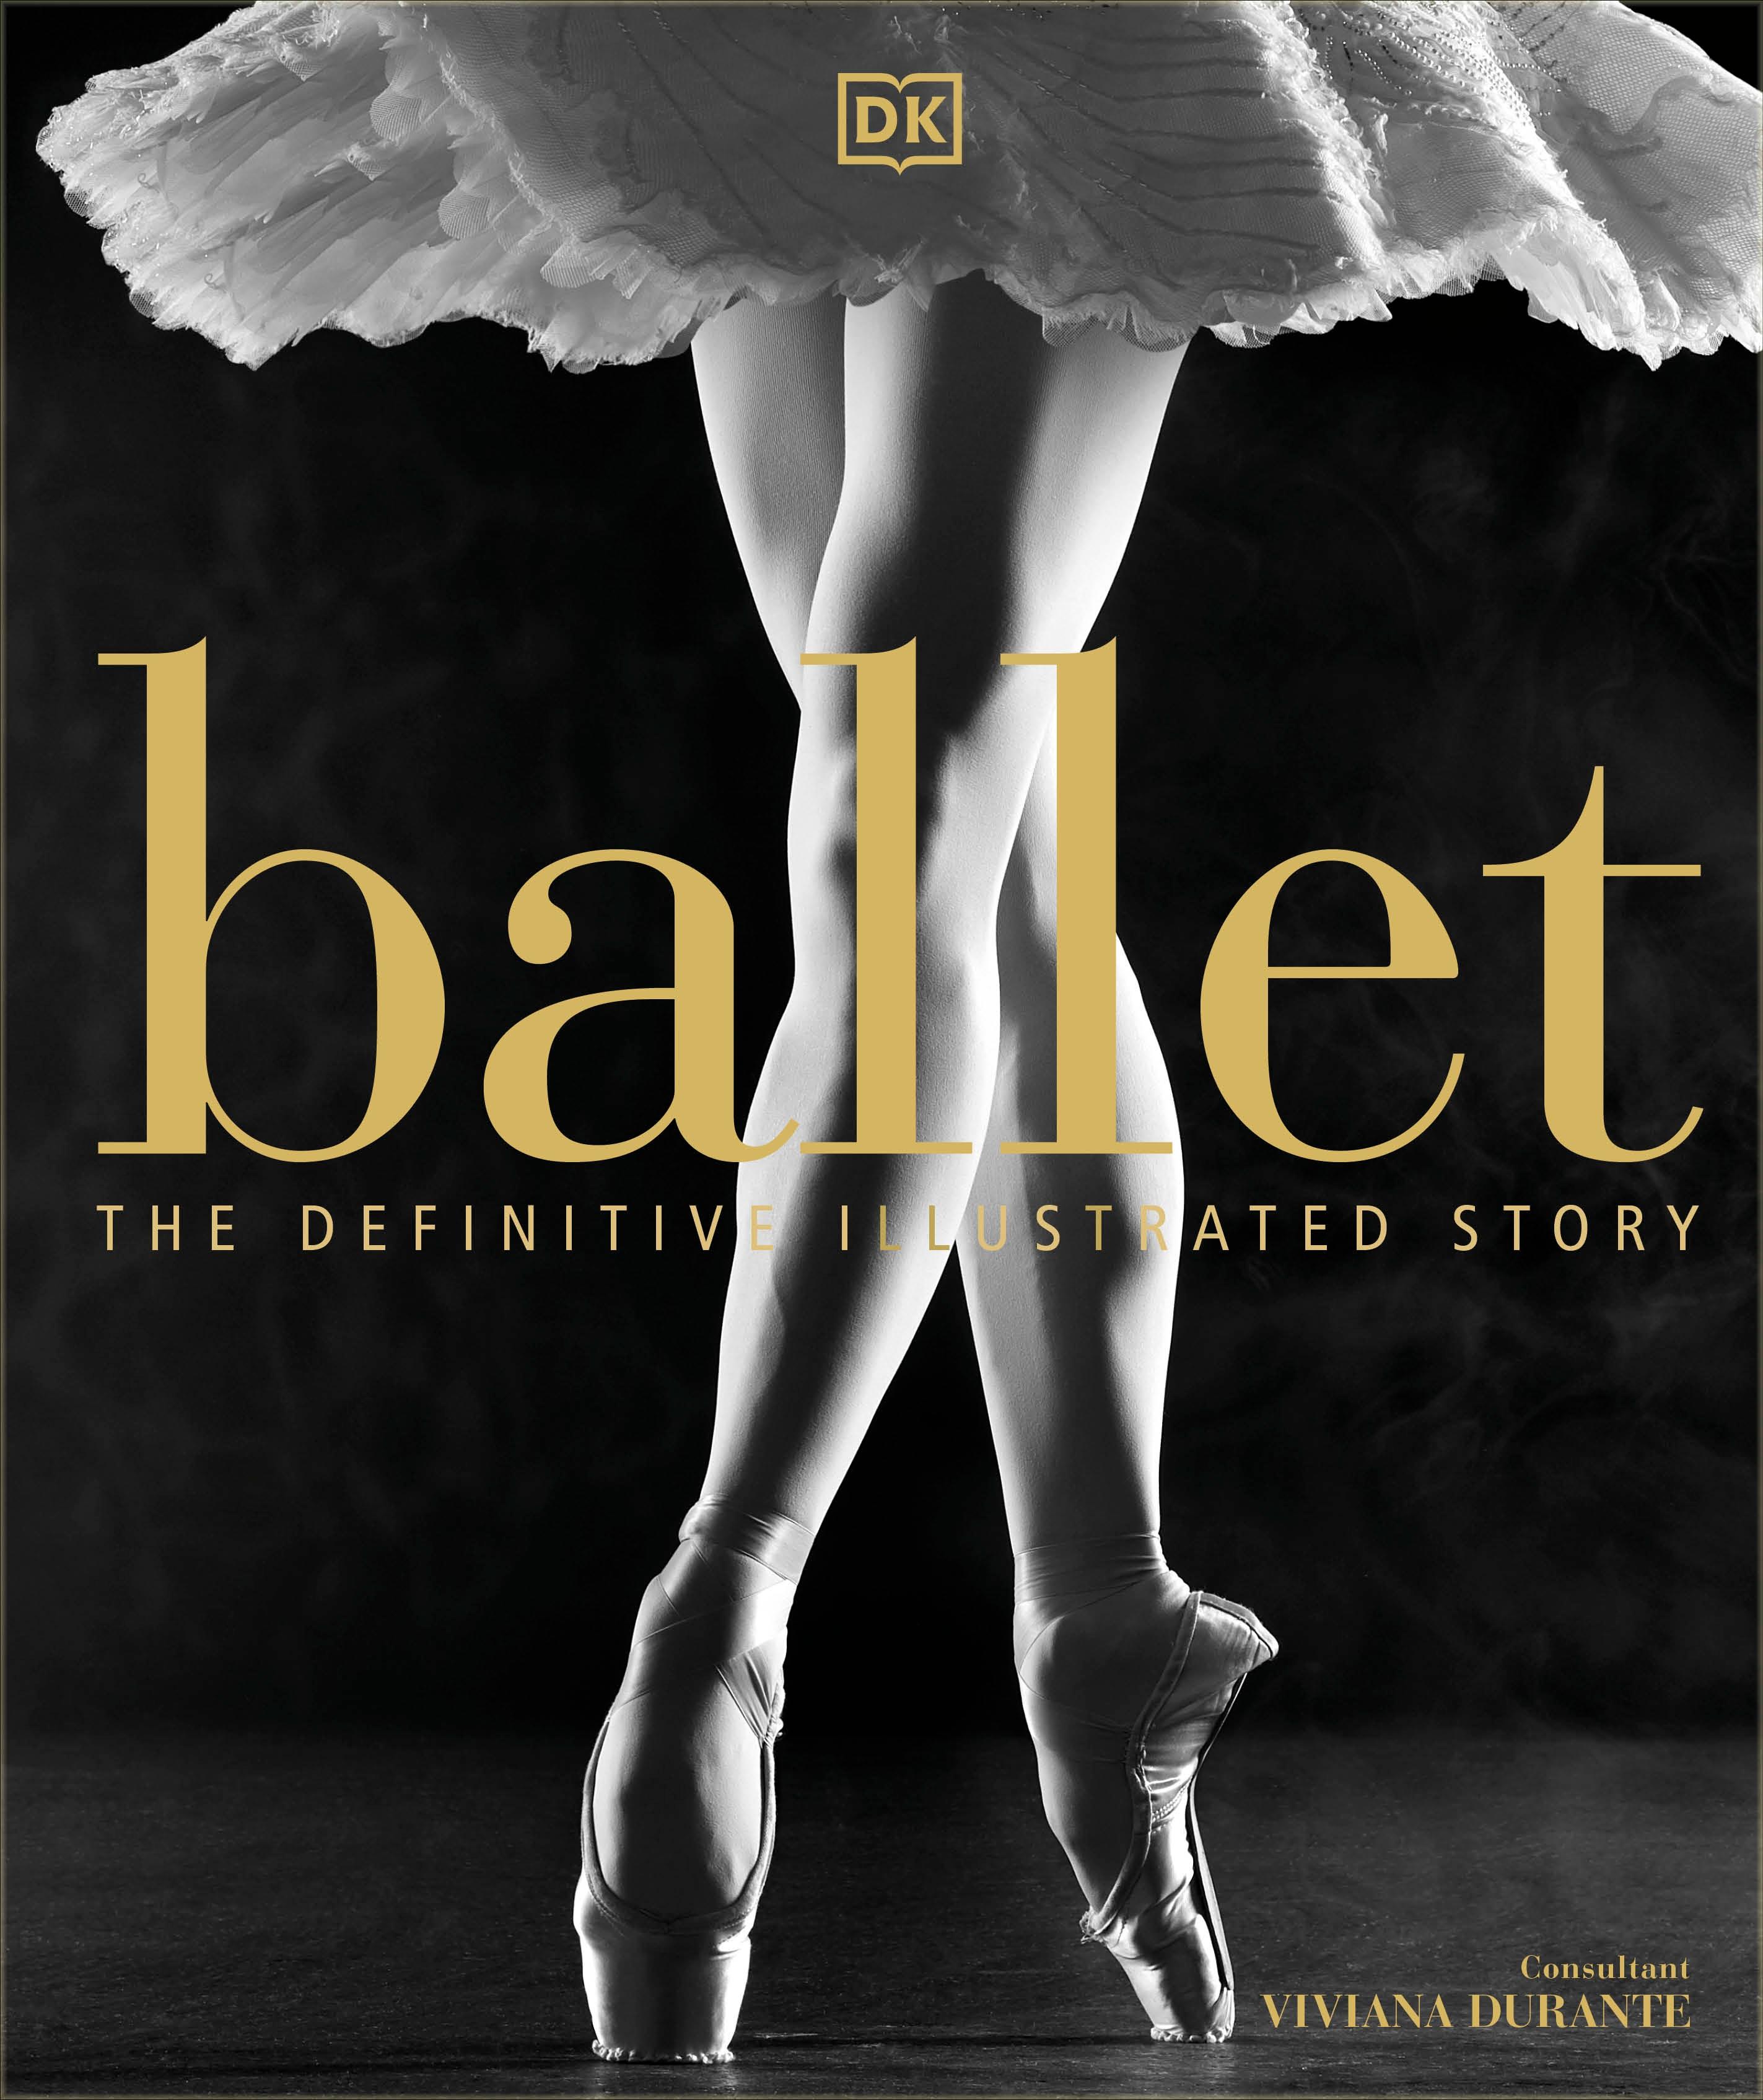 Ballet / The Definitive Illustrated Story / DK / Buch / 360 S. / Englisch / 2018 / Dorling Kindersley Ltd. / EAN 9780241302316 - DK